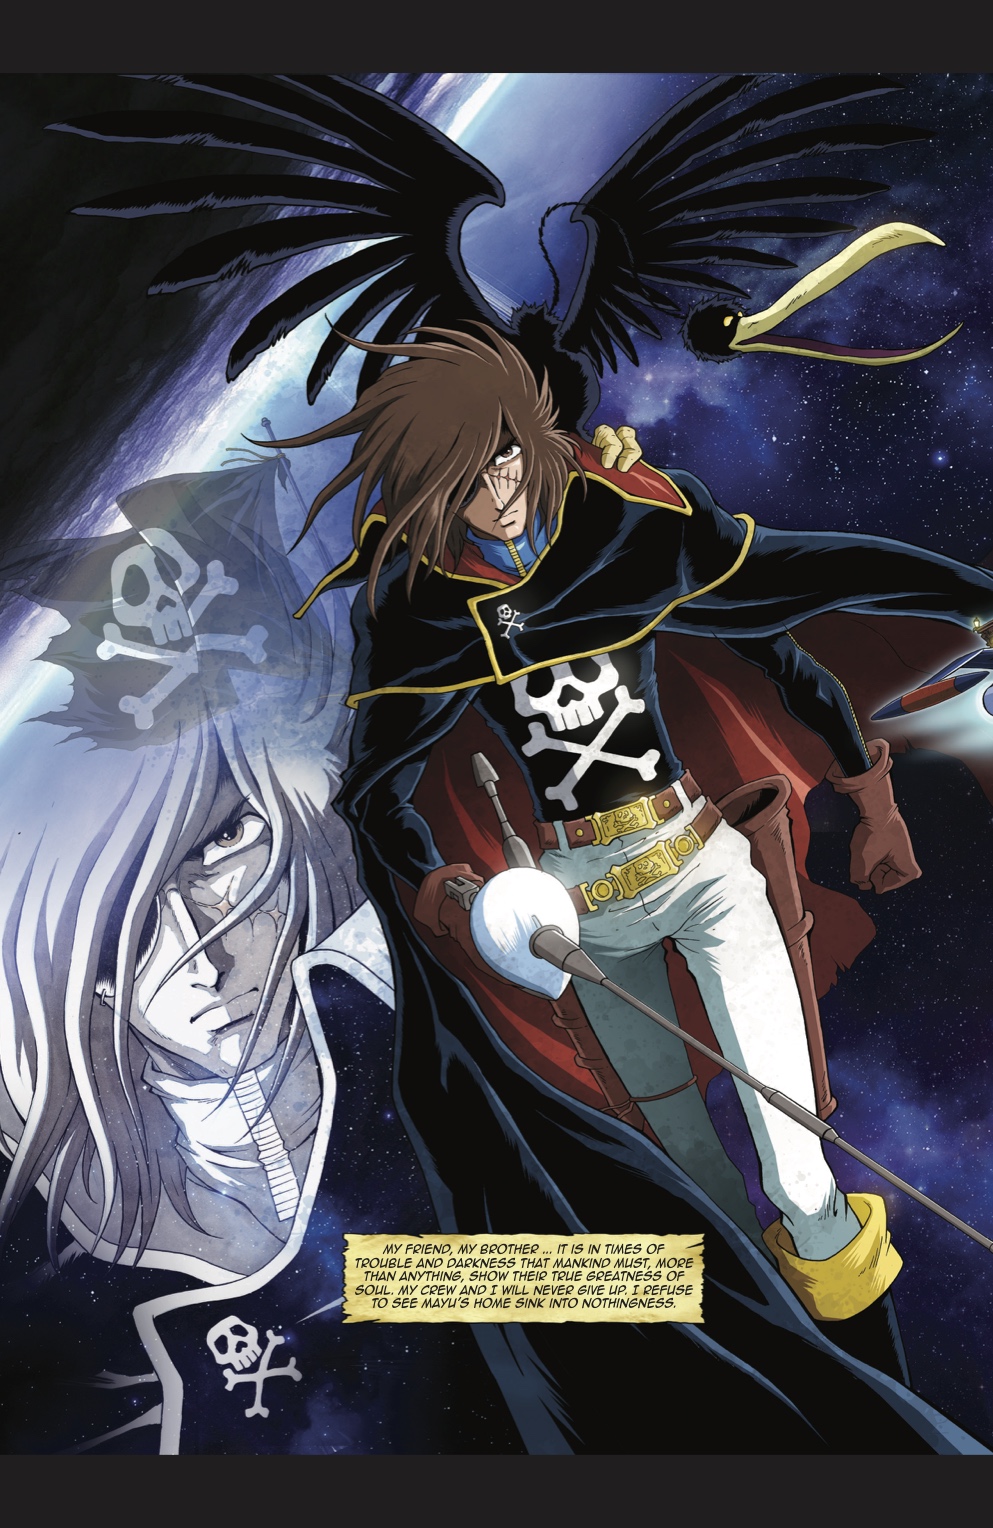 Pirate - Hey Mangas ! | Anime pirate, Anime character design, Anime